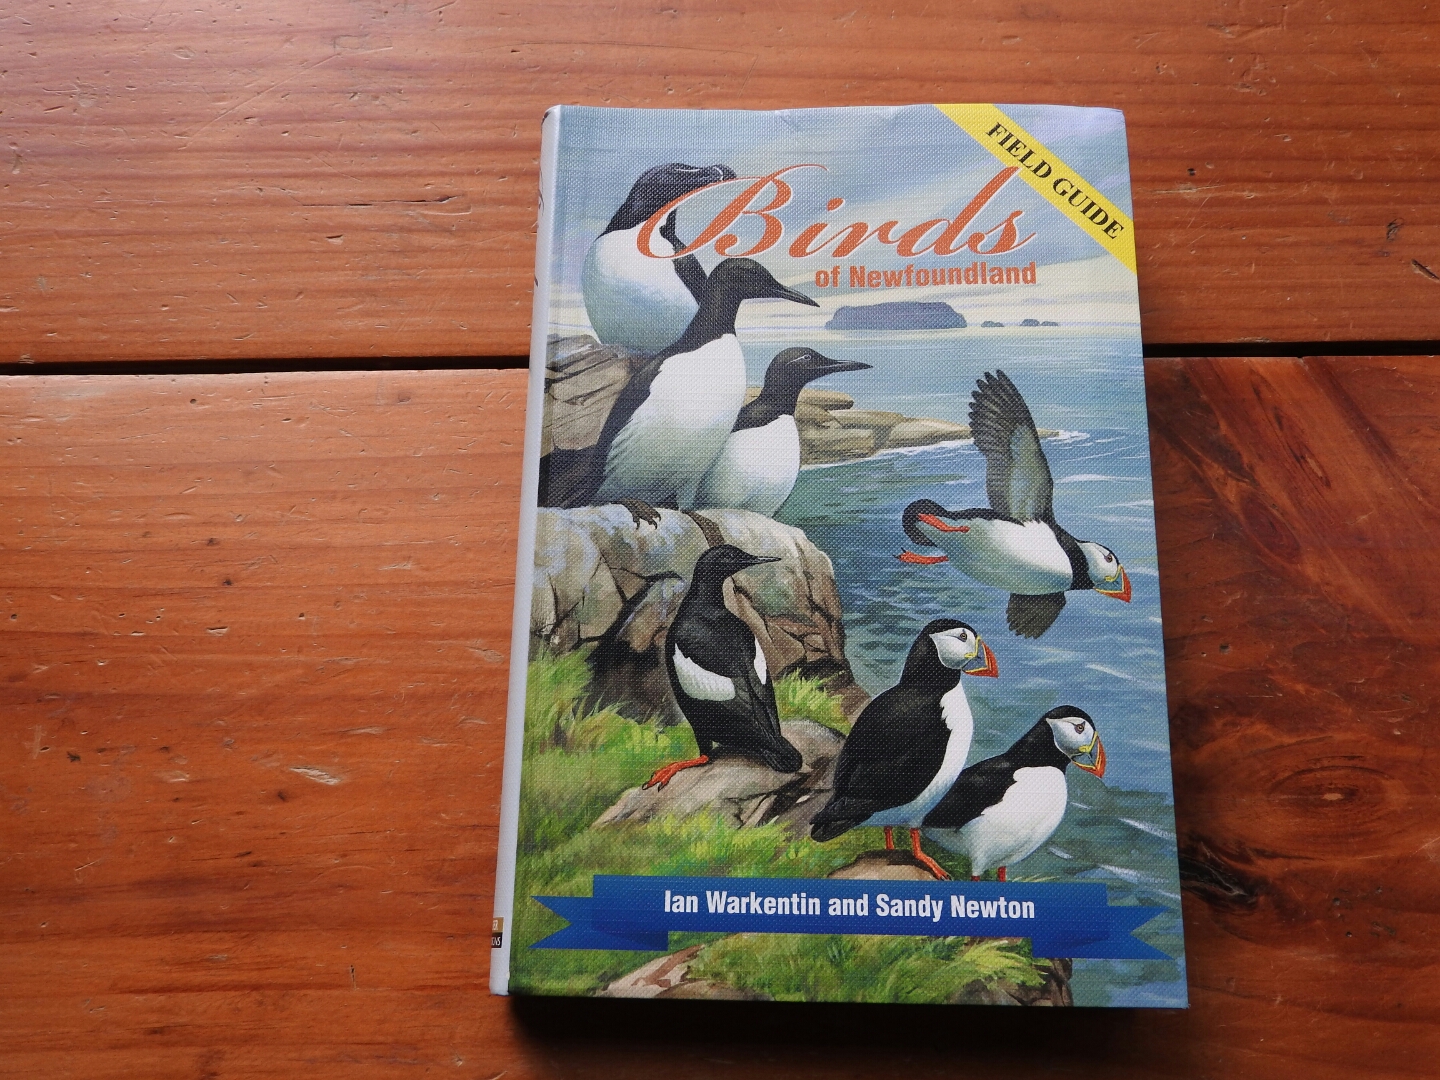 Birds of Newfoundland